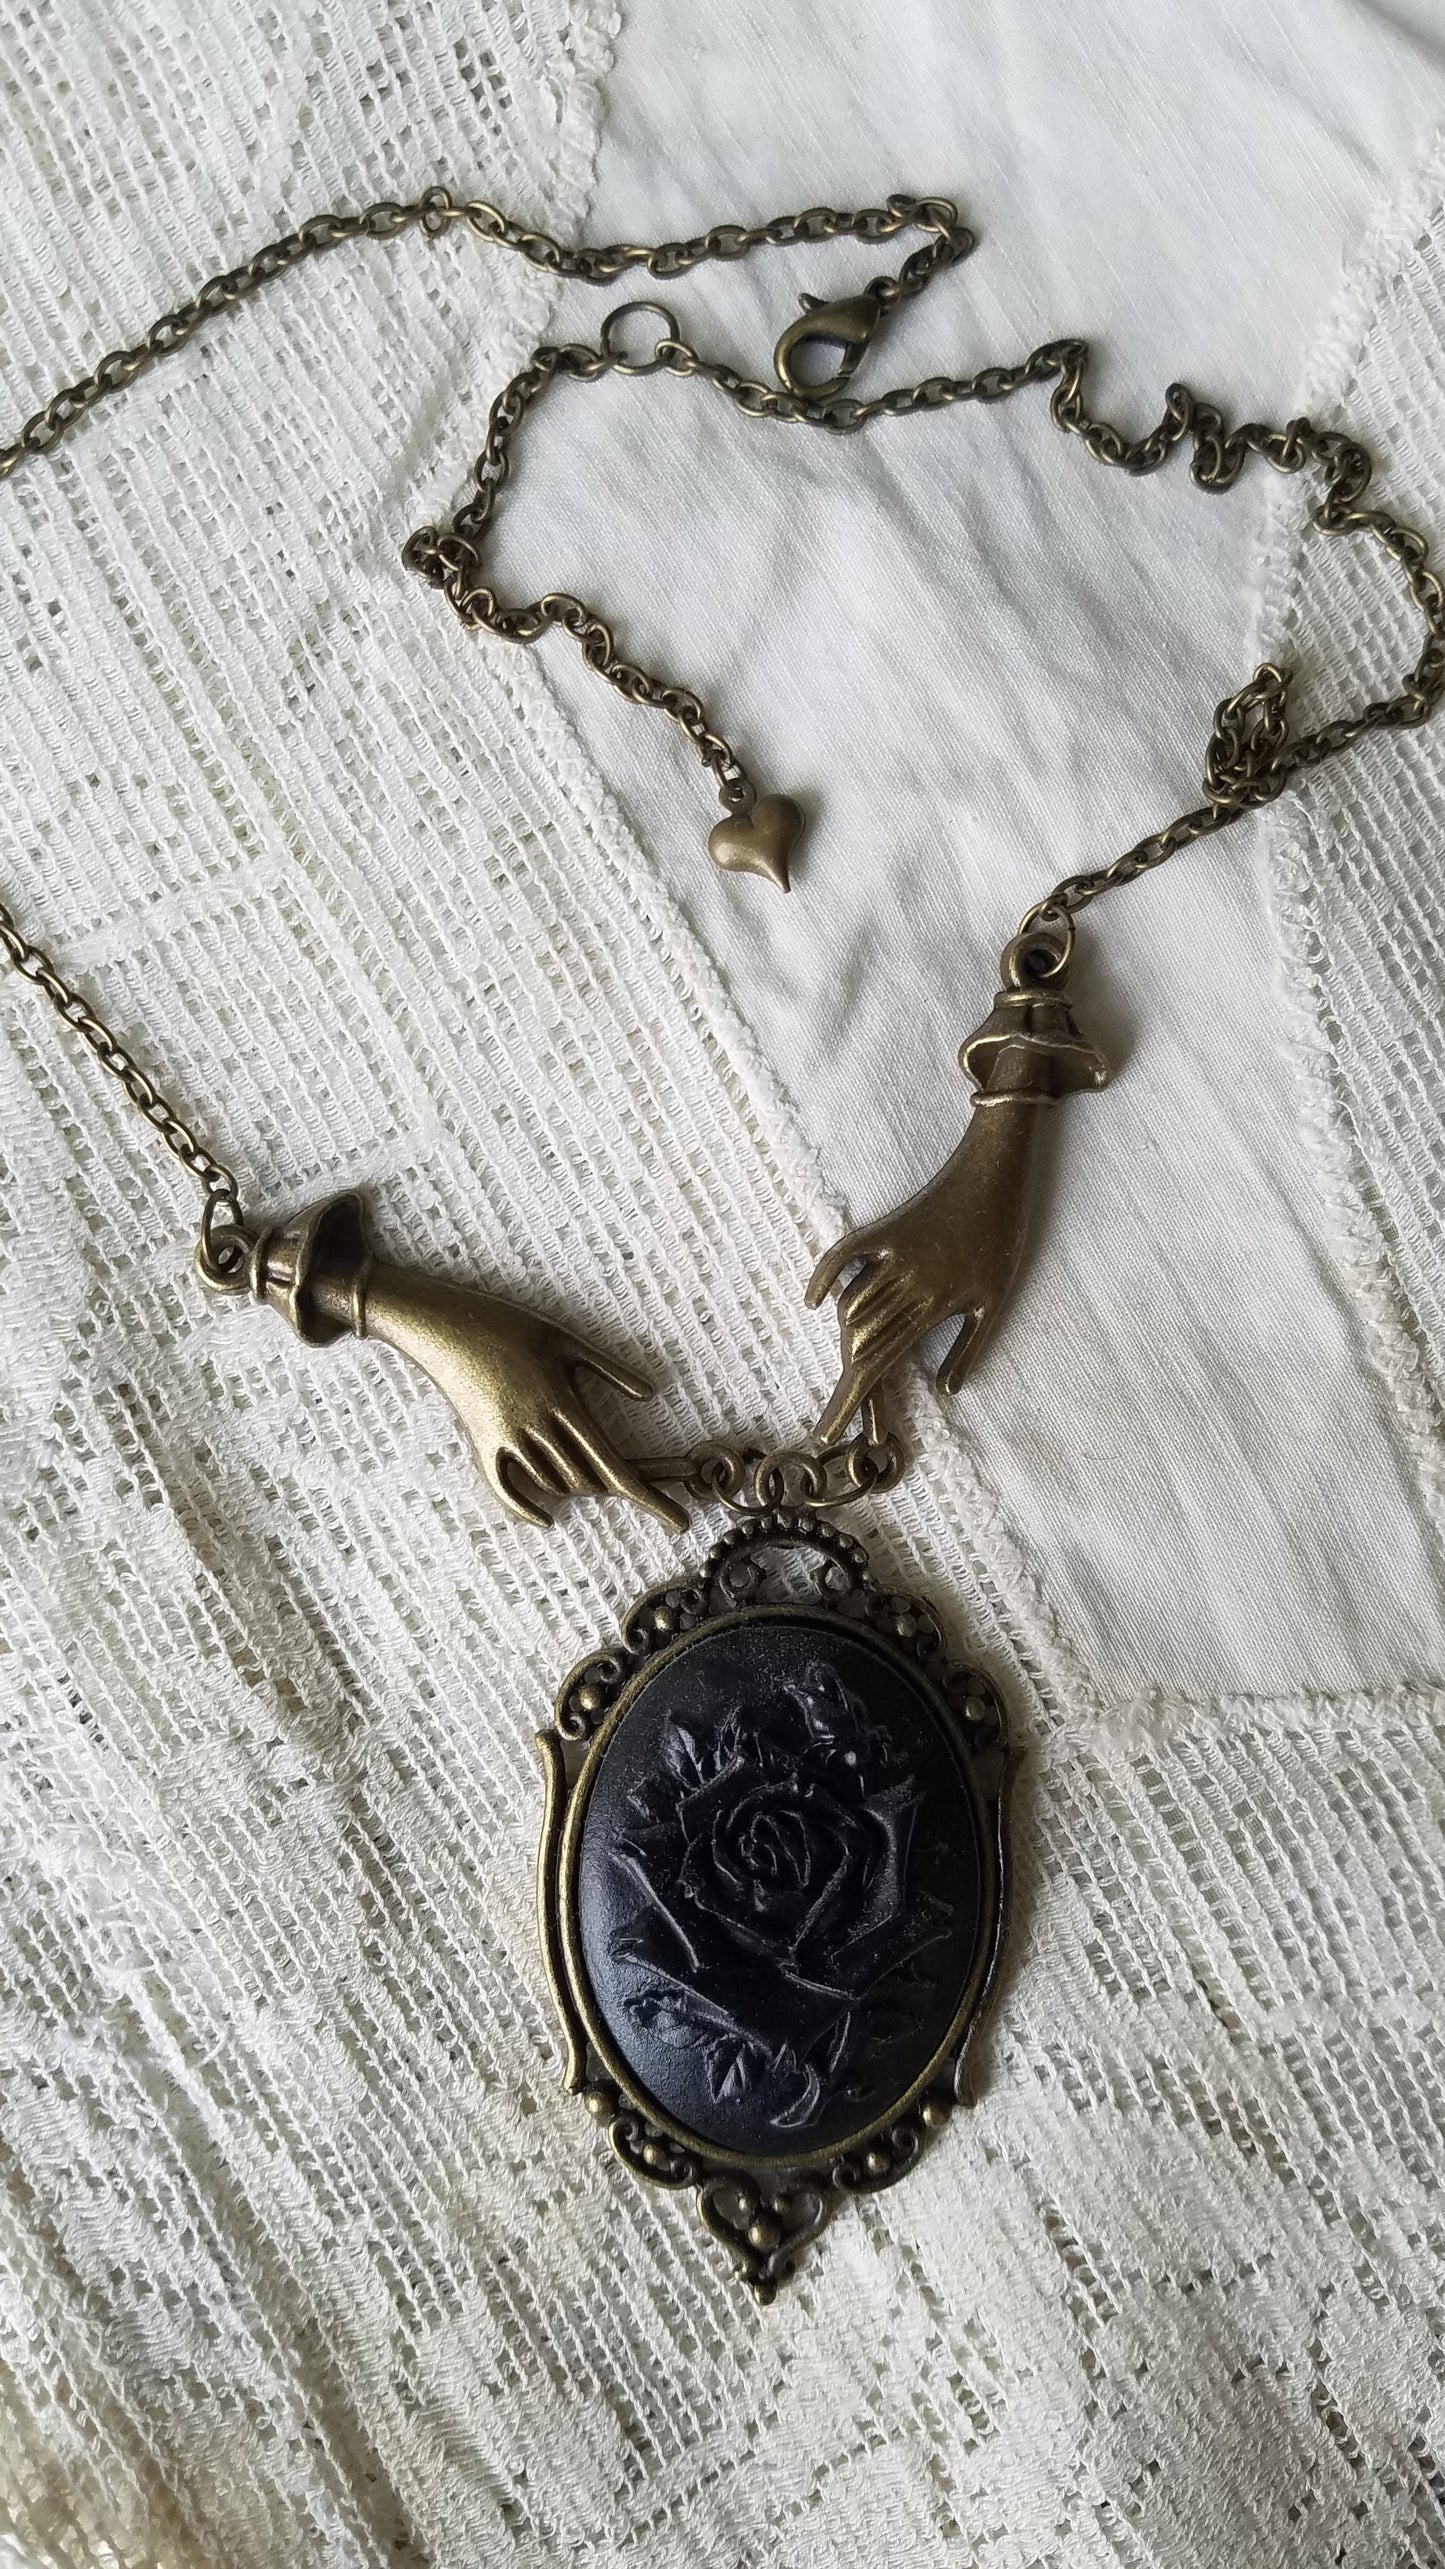 Black Rose Cameo Necklace by Dark Cage Designs